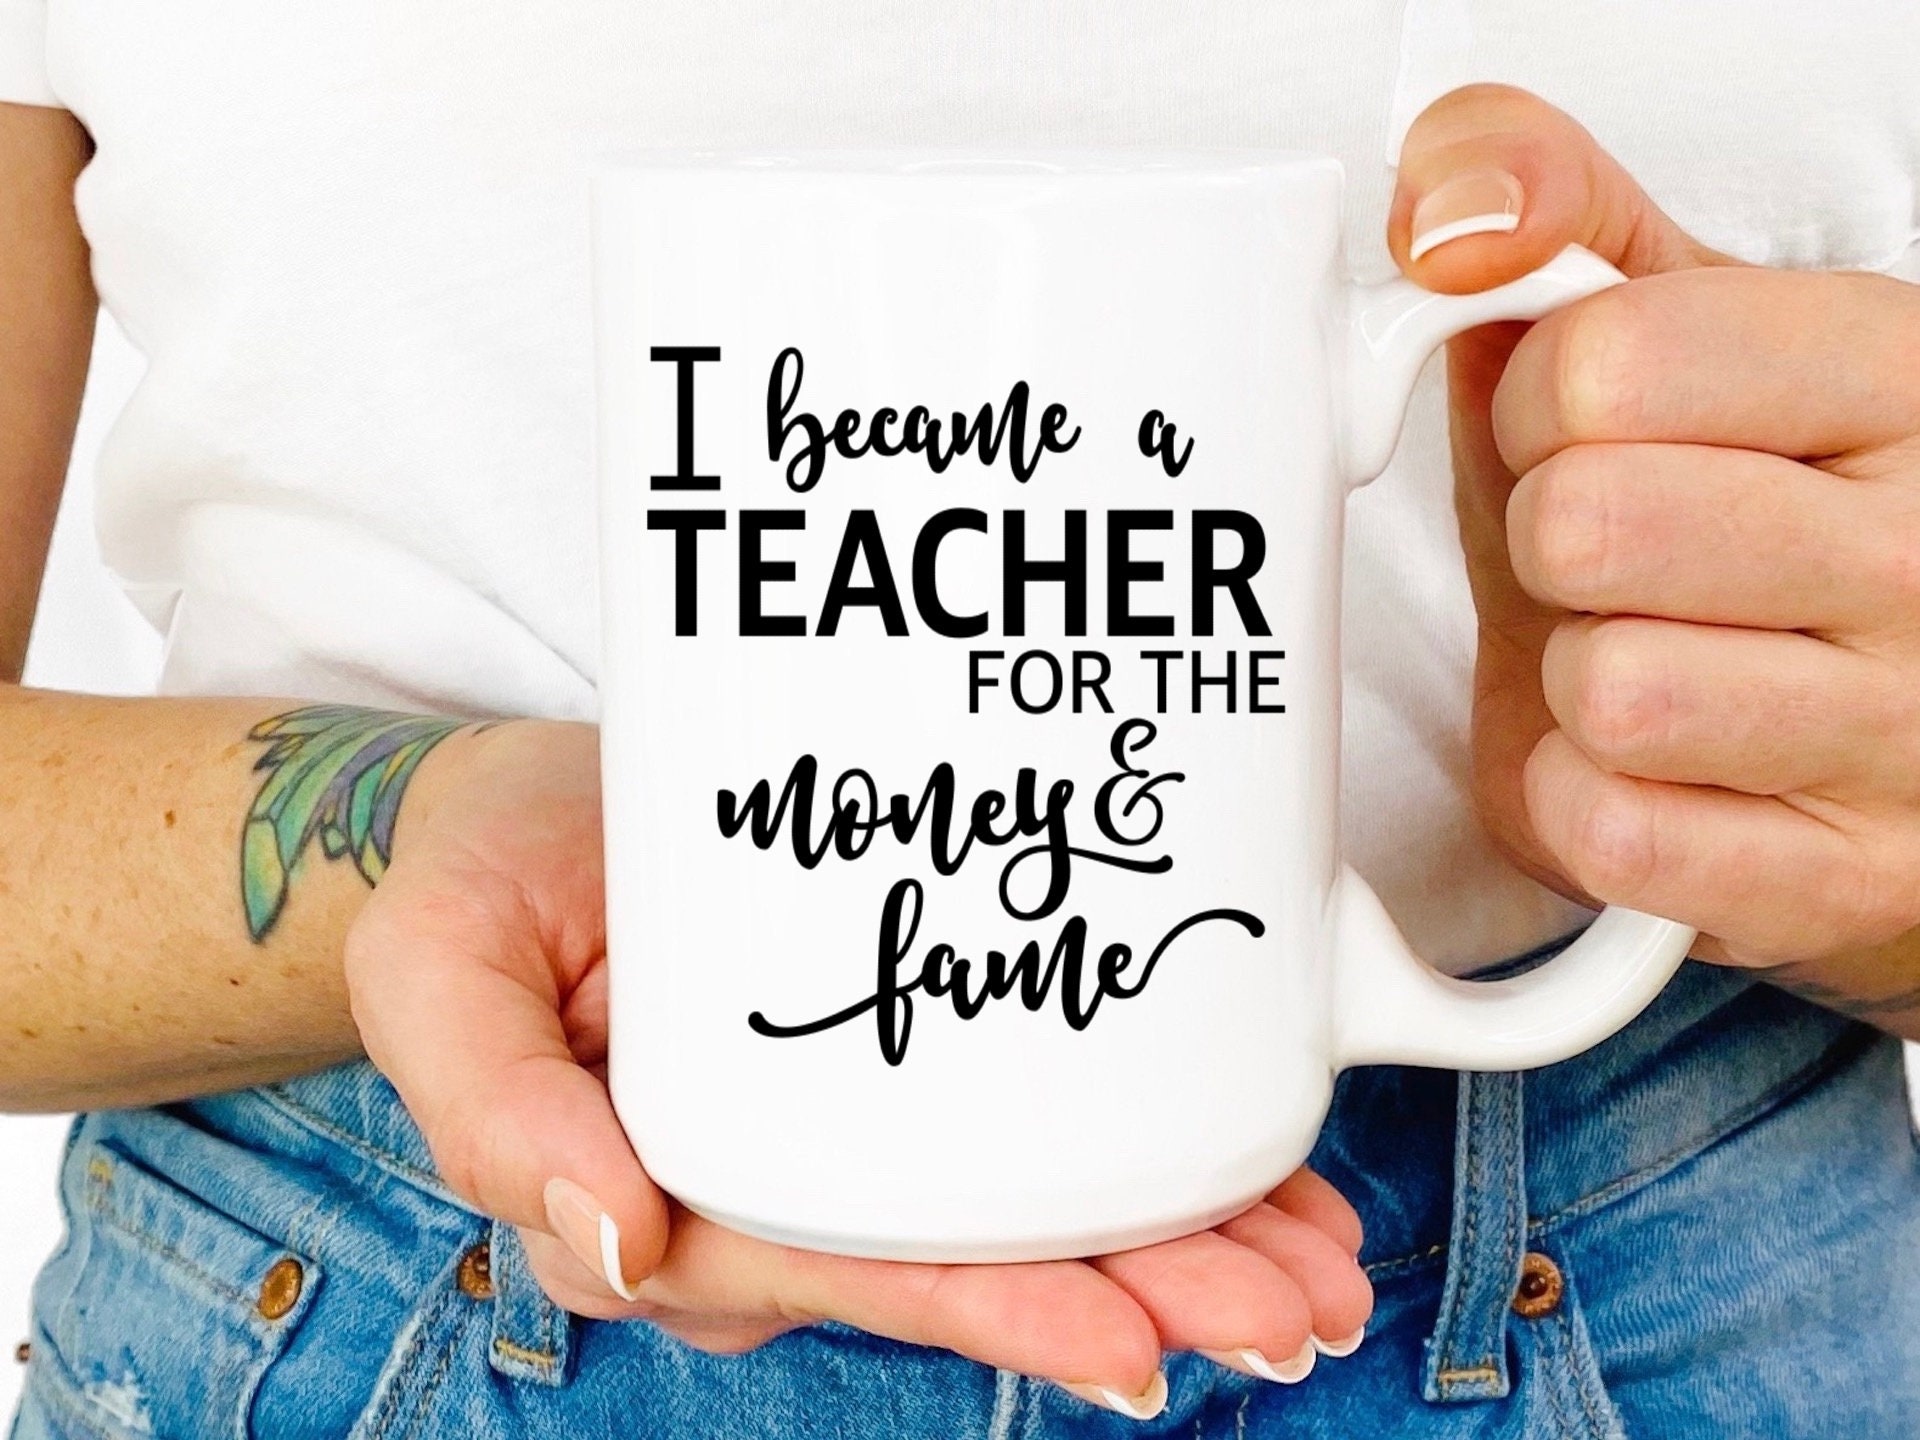 Personalised Gift Teacher Female Mug Money Box Cup Brown Hair Glasses Office Tea 